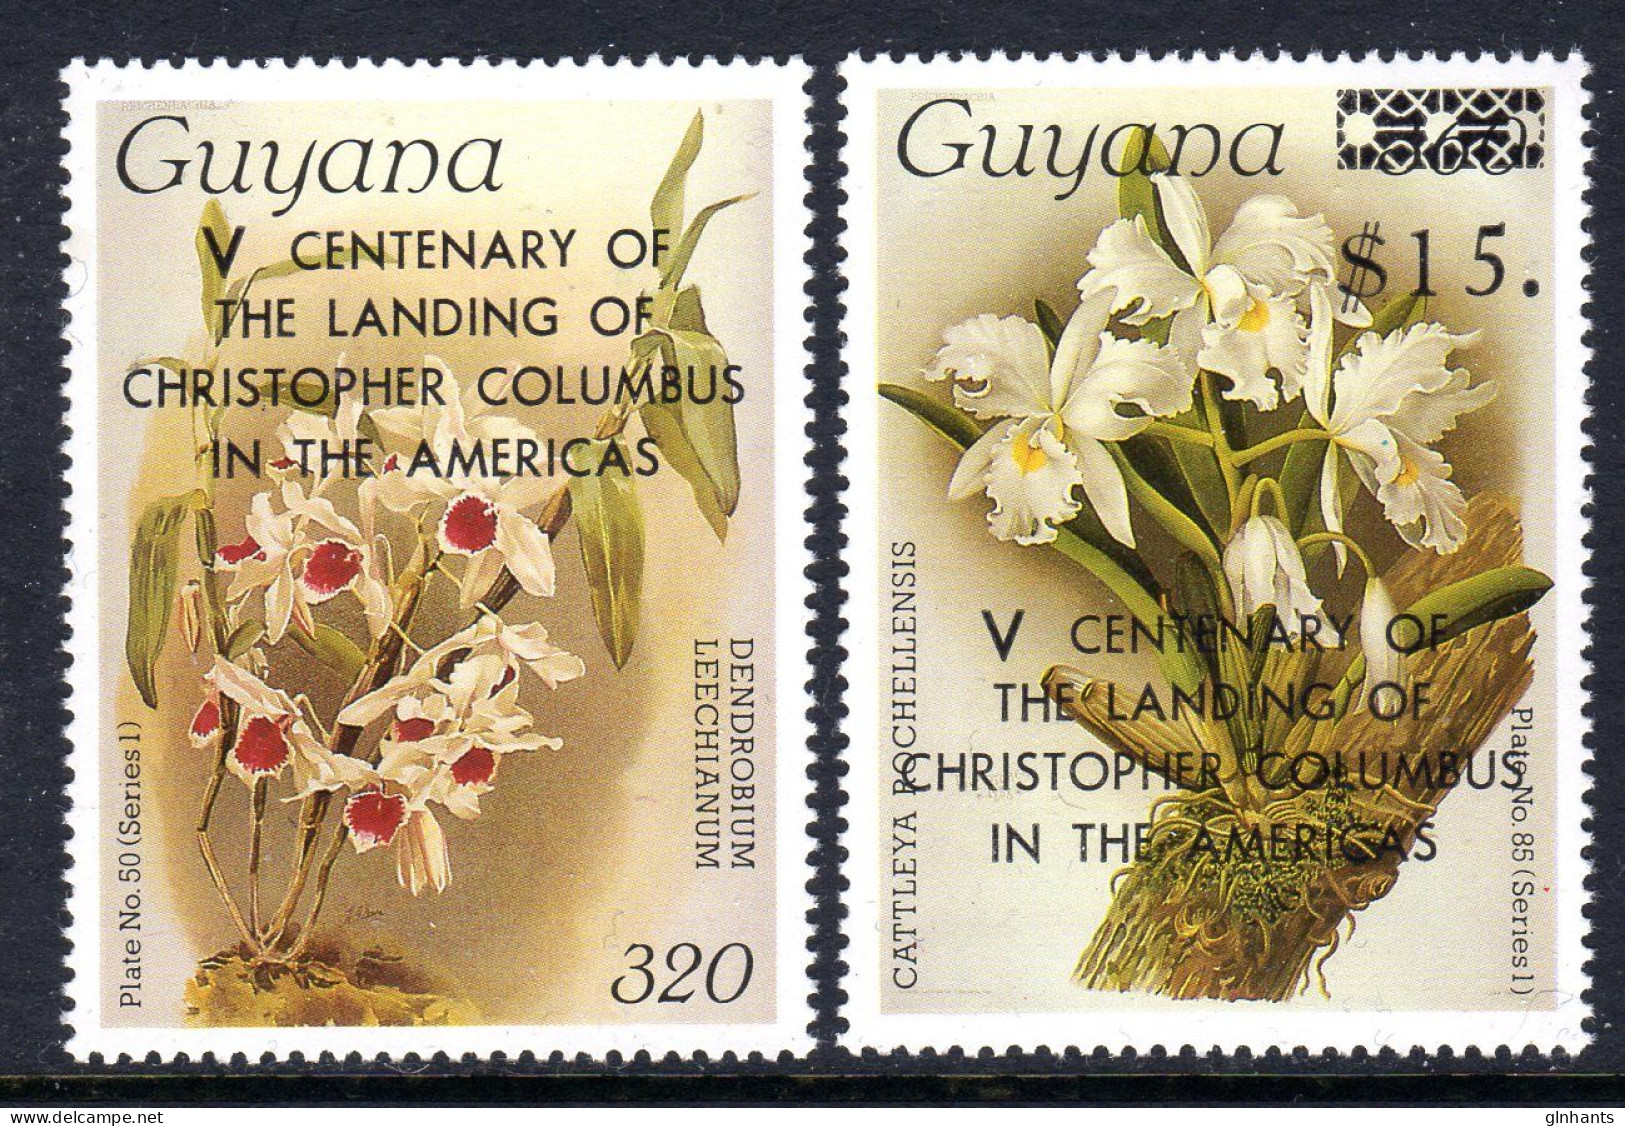 GUYANA - 1988 REICHENBACHIA ORCHIDS COLUMBUS CENTENARY SET (2V) FINE MNH ** SG 2496-2497 - Guyana (1966-...)